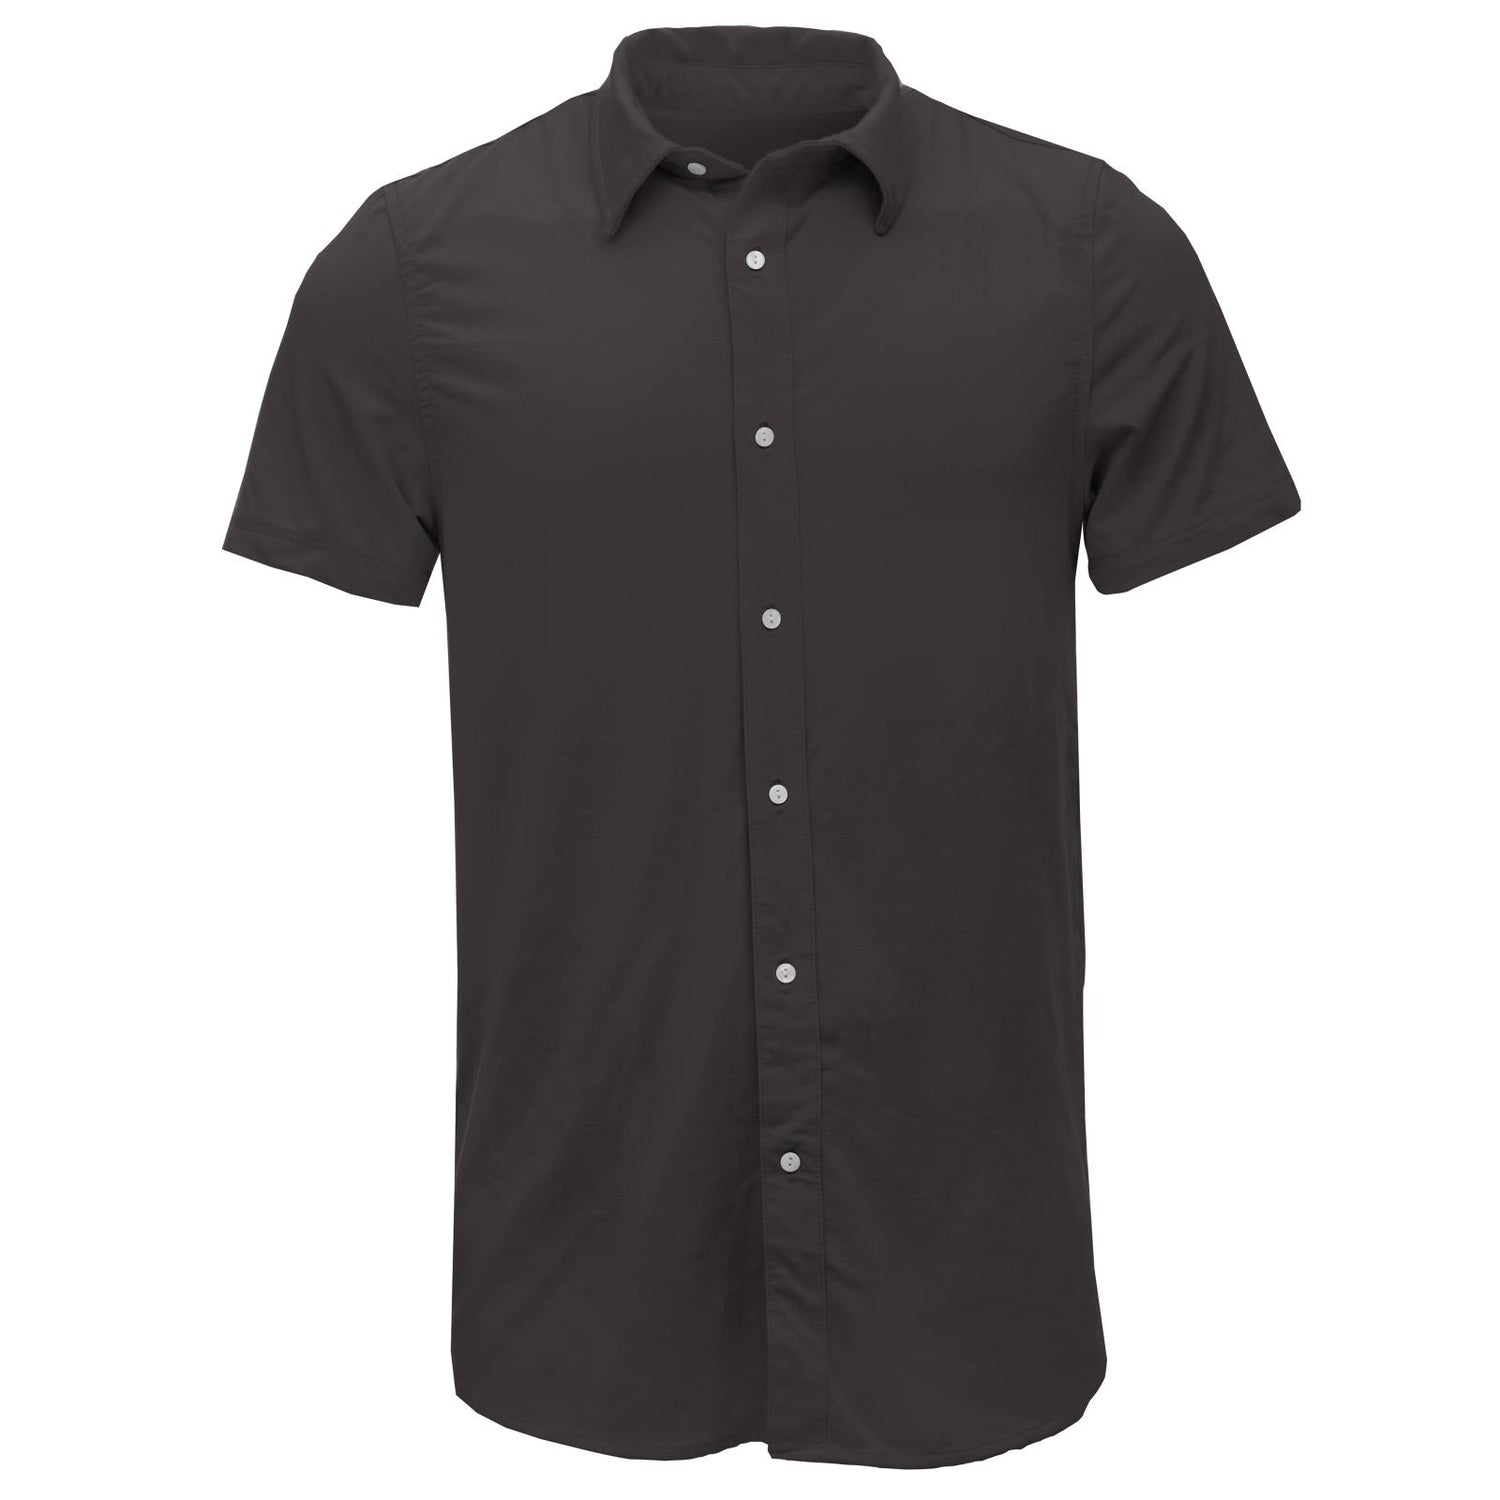 Men's Short Sleeve Luxe Jersey Button Down Shirt in Midnight